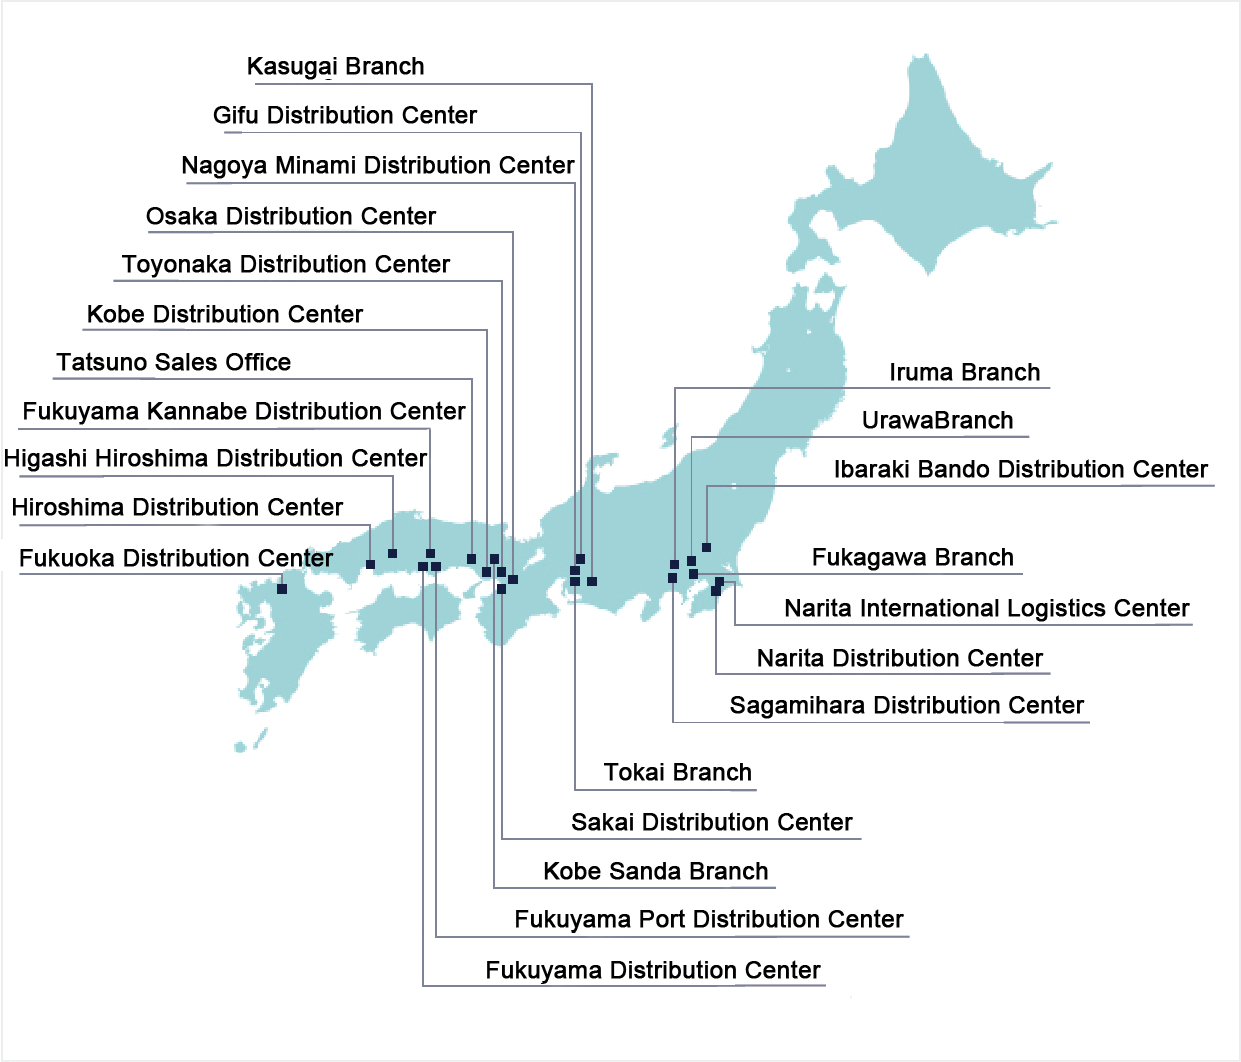 Fukuyama Transporting's distrubution center locations in Japan.